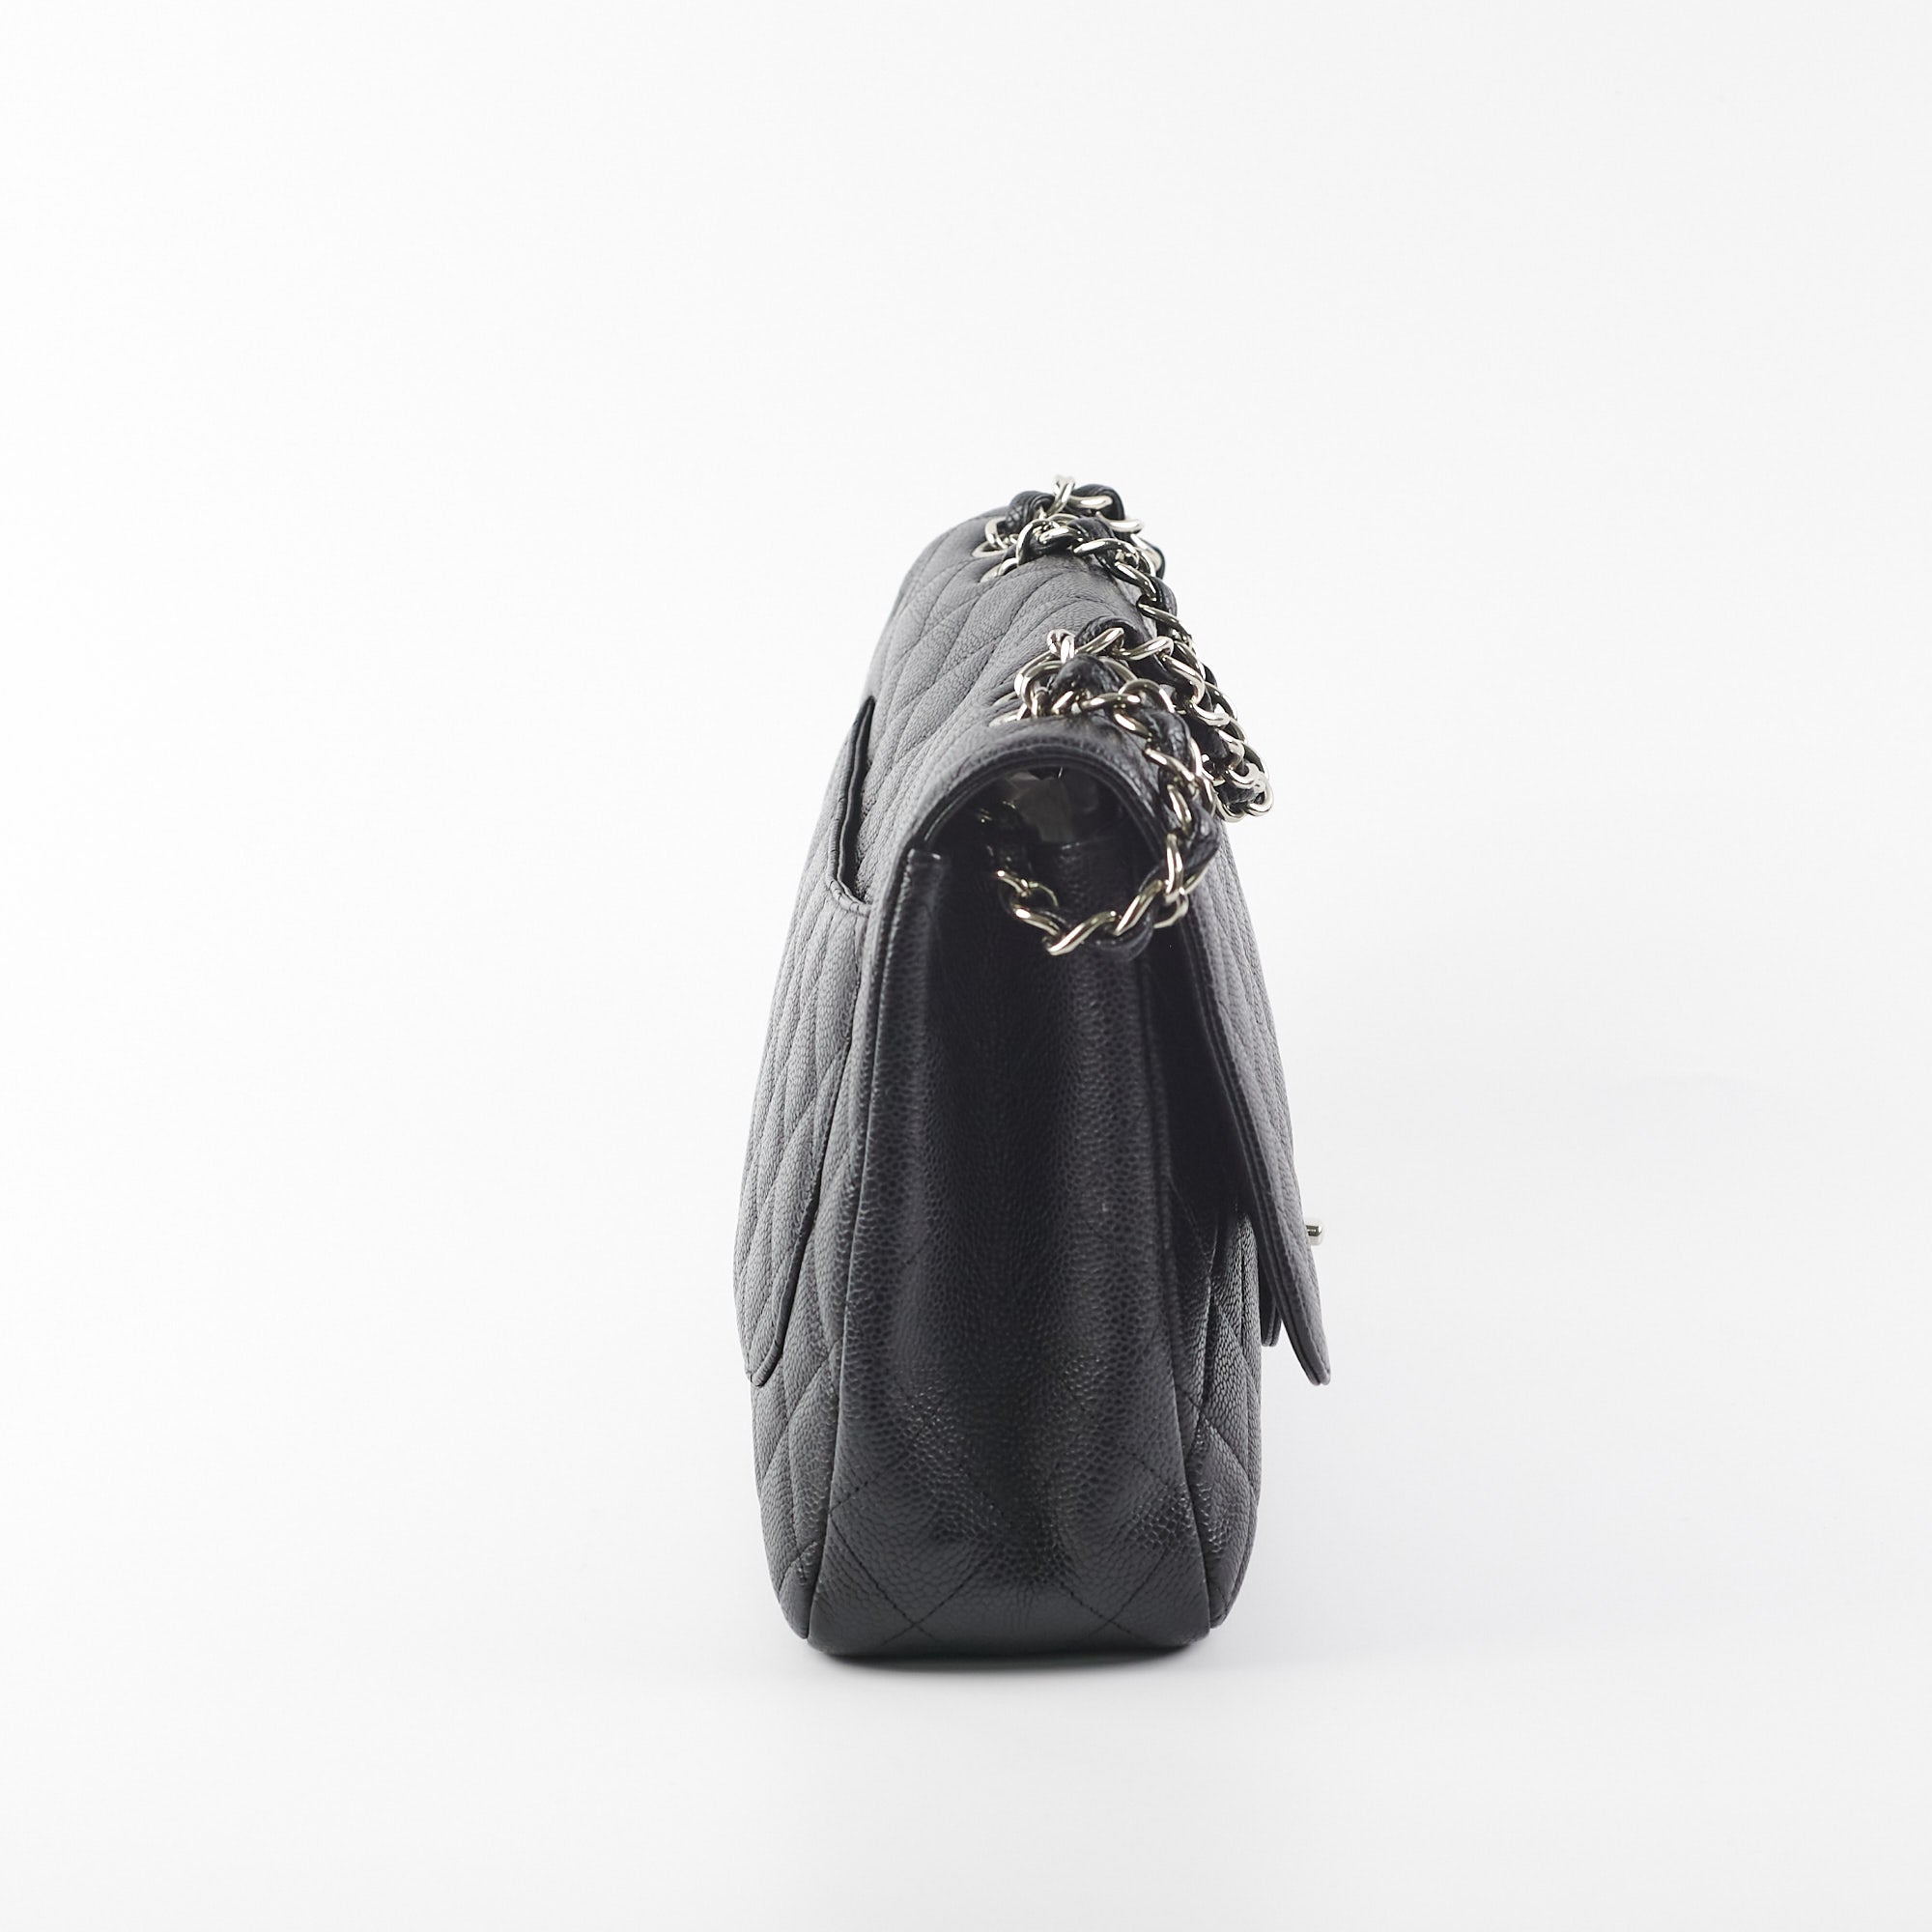 Chanel Jumbo Caviar Classic Single Flap Bag - Black Shoulder Bags, Handbags  - CHA154034